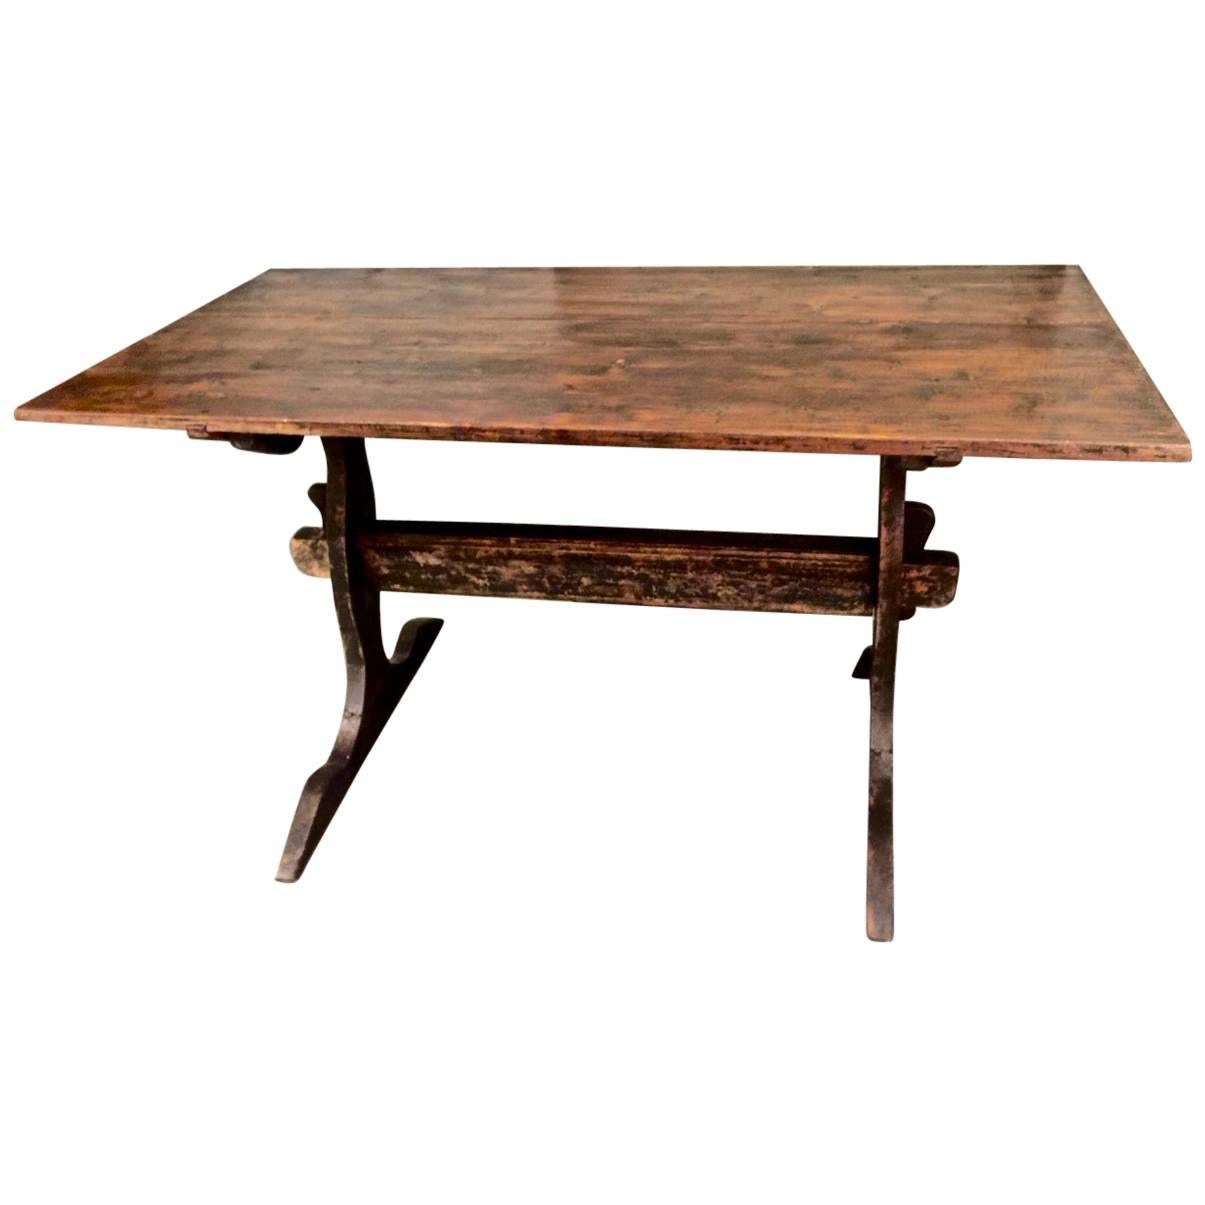 Antique Swedish Trestle Table, circa 1800